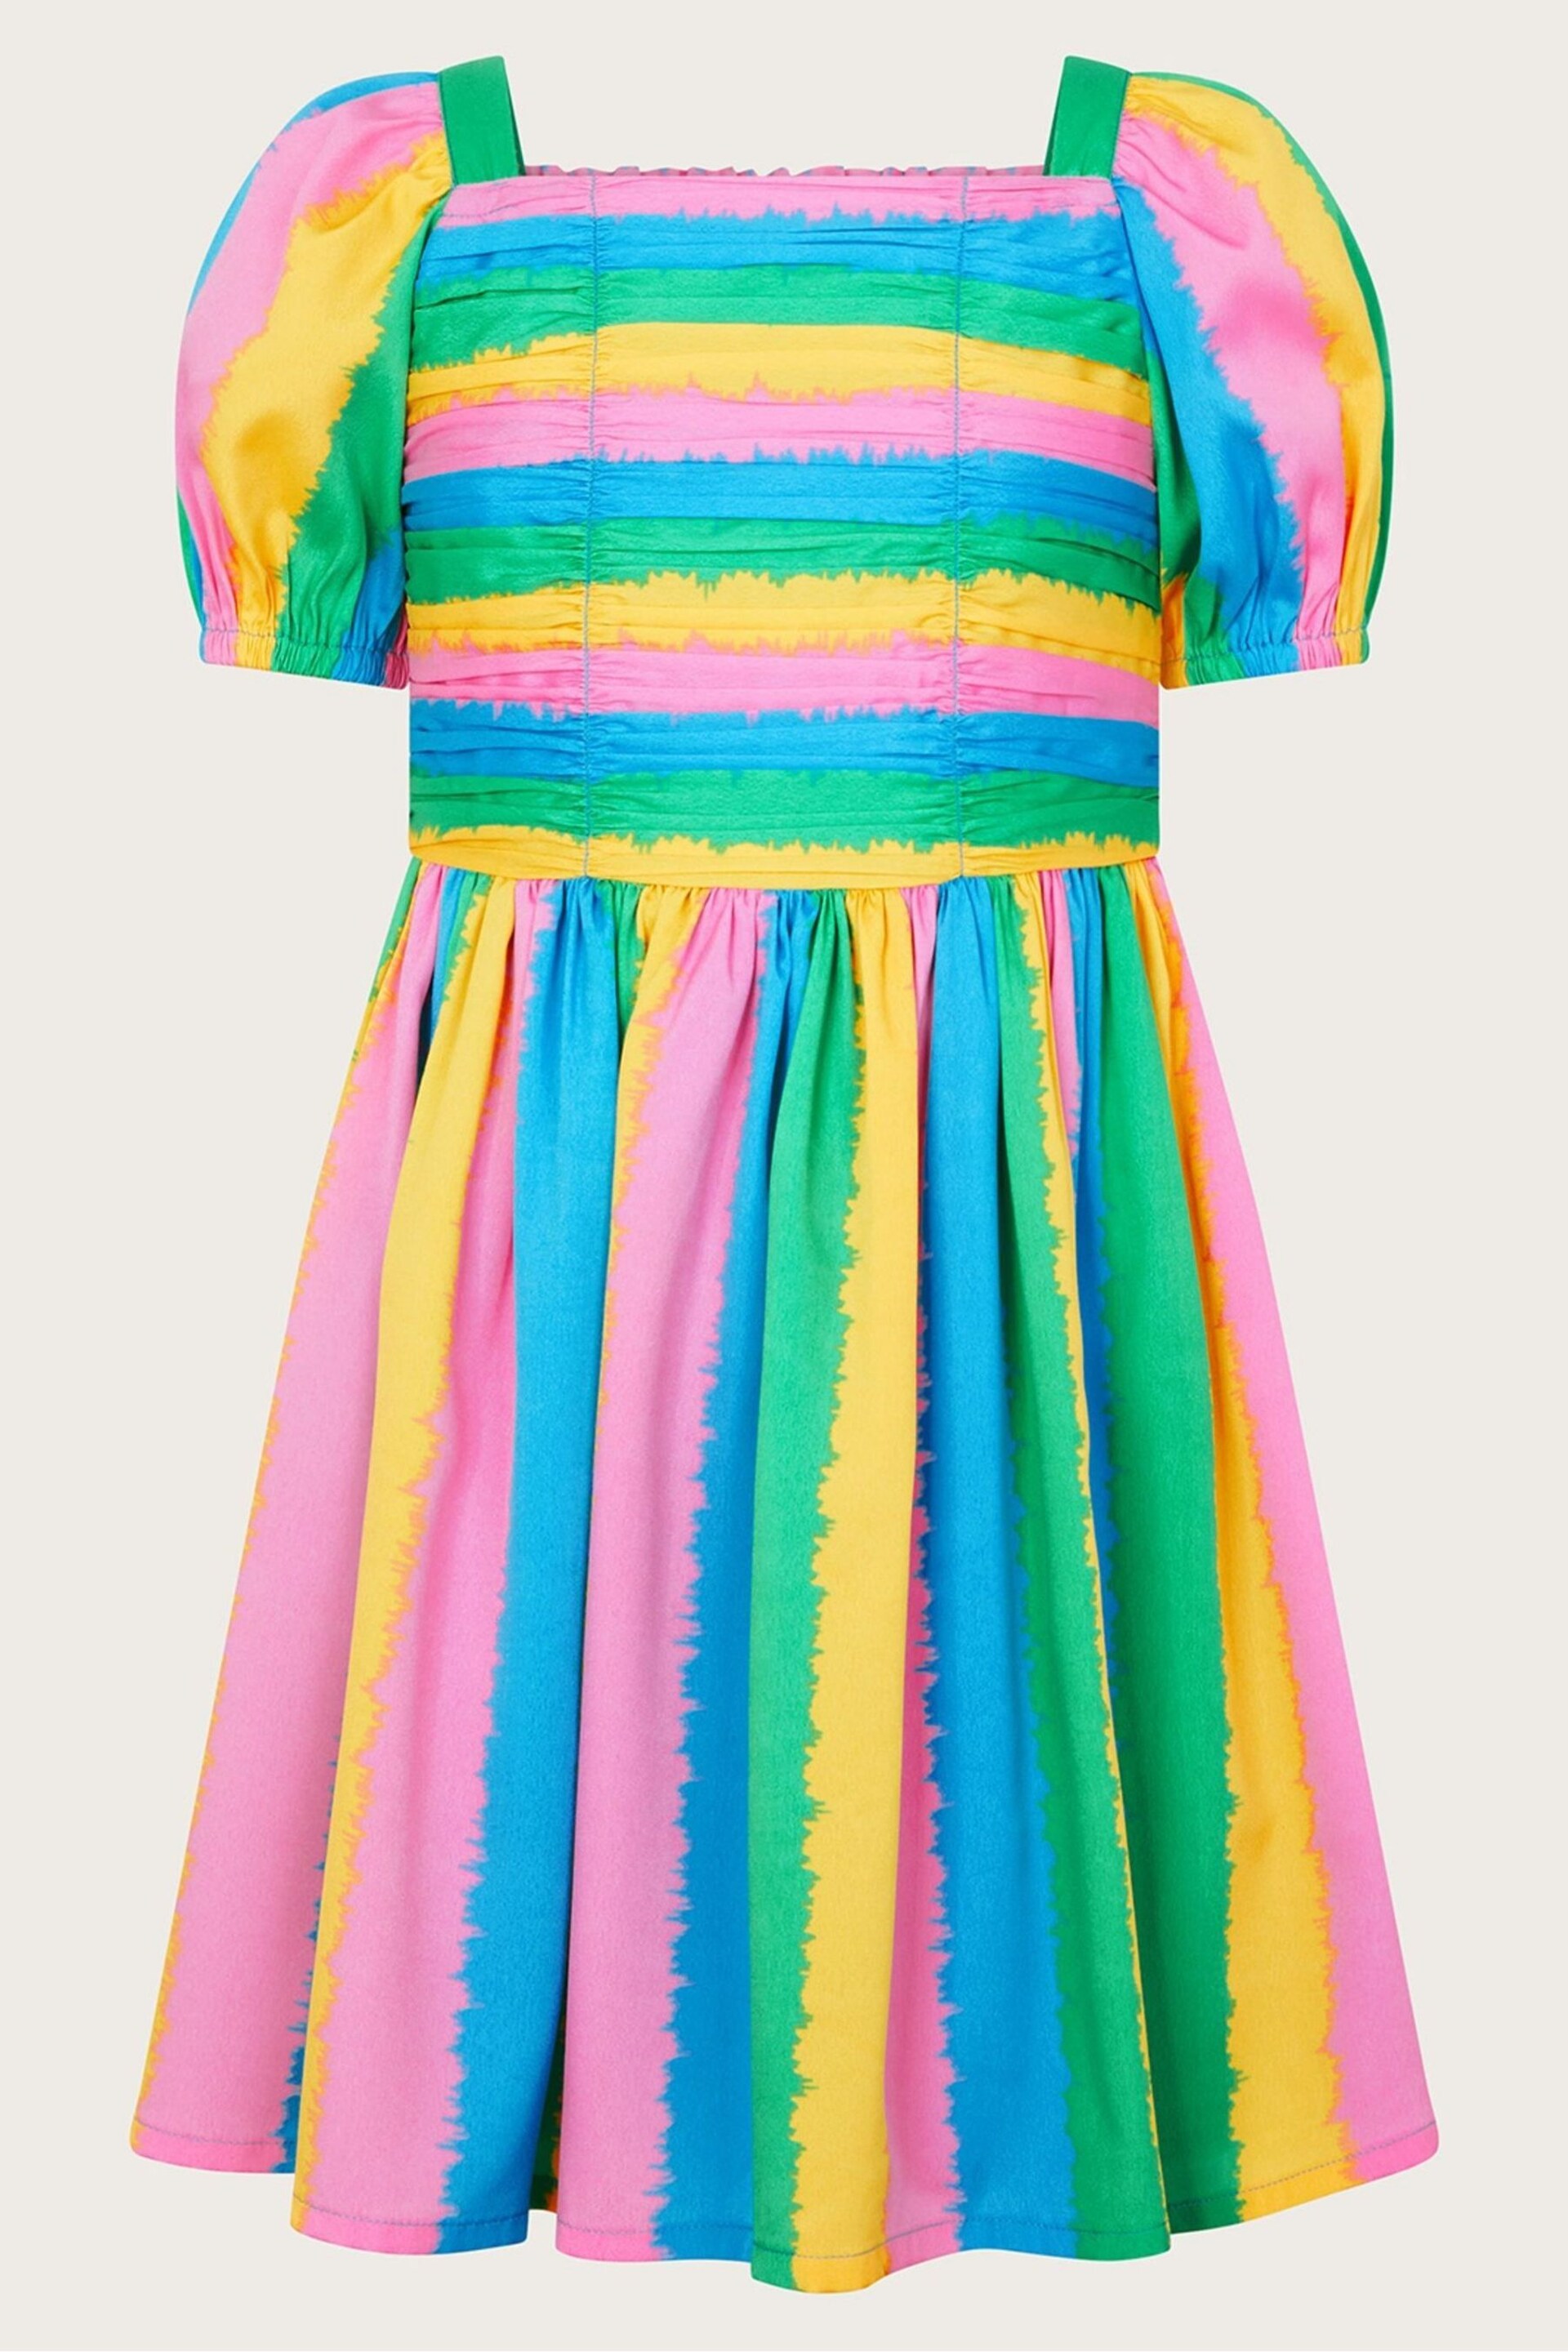 Stripe Pleated Dress - Image 1 of 3